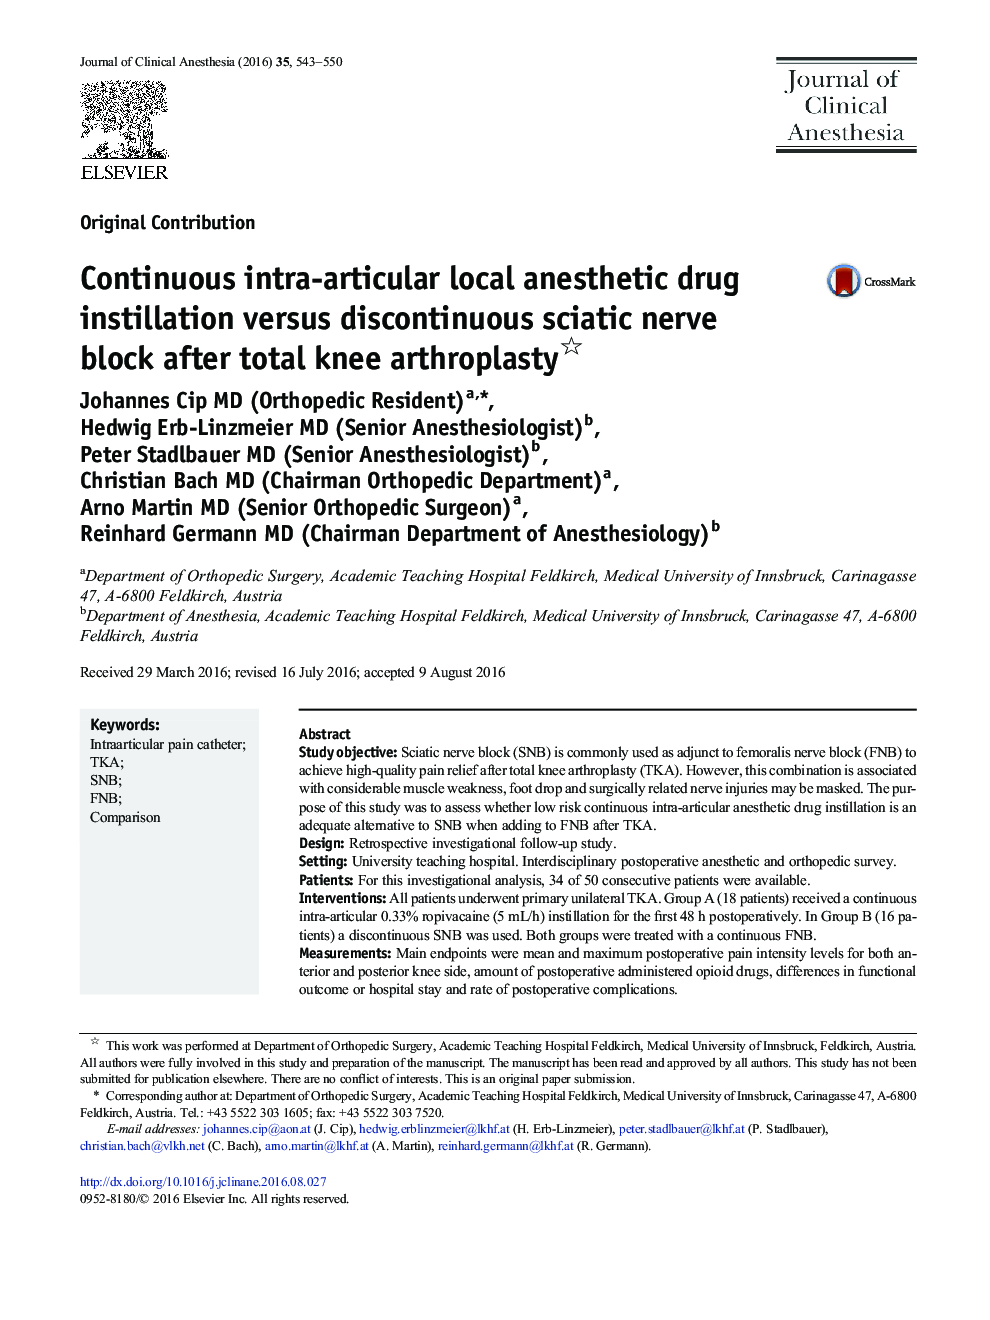 Continuous intra-articular local anesthetic drug instillation versus discontinuous sciatic nerve block after total knee arthroplasty